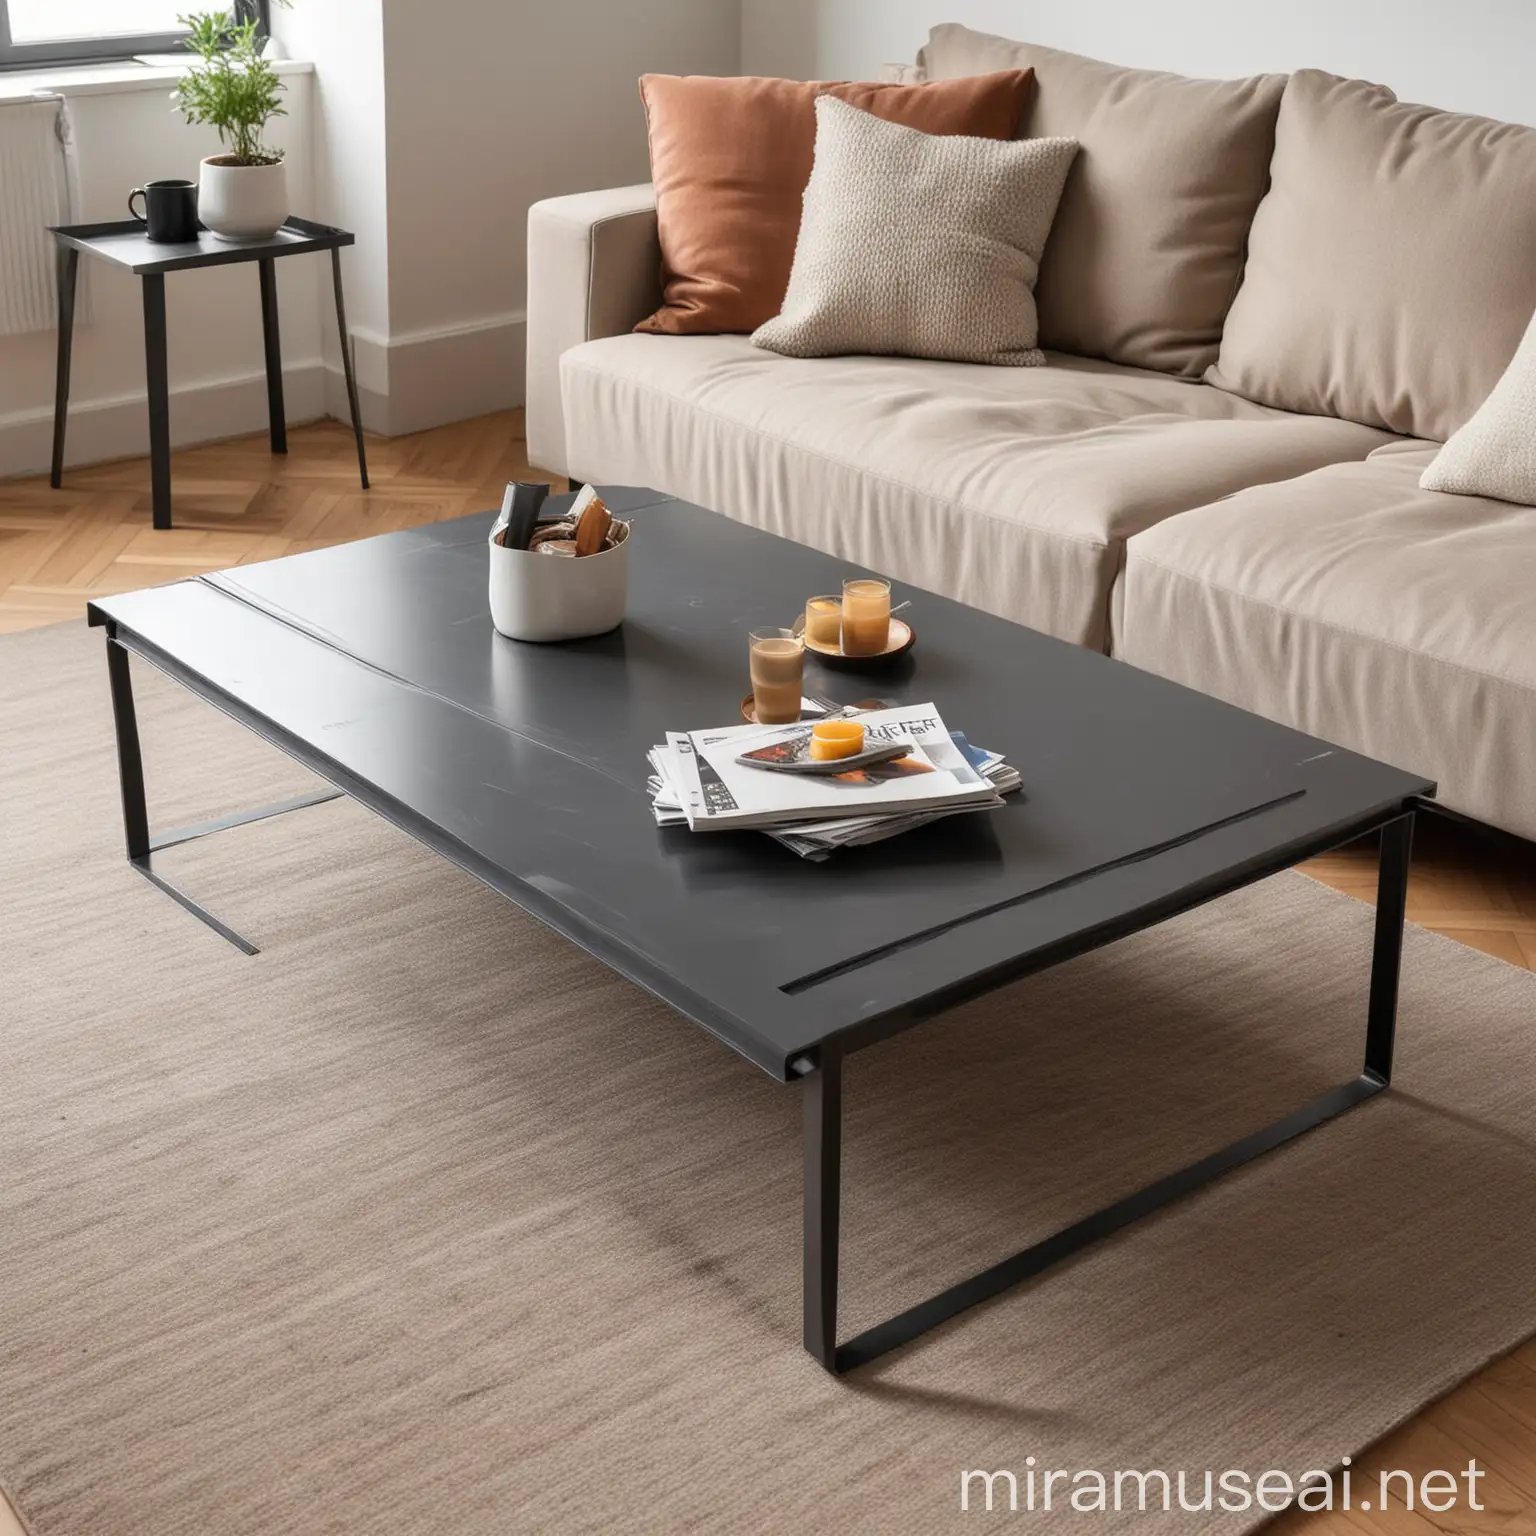 Minimalist Sheet Steel Coffee Table with Cozy Sofa Background